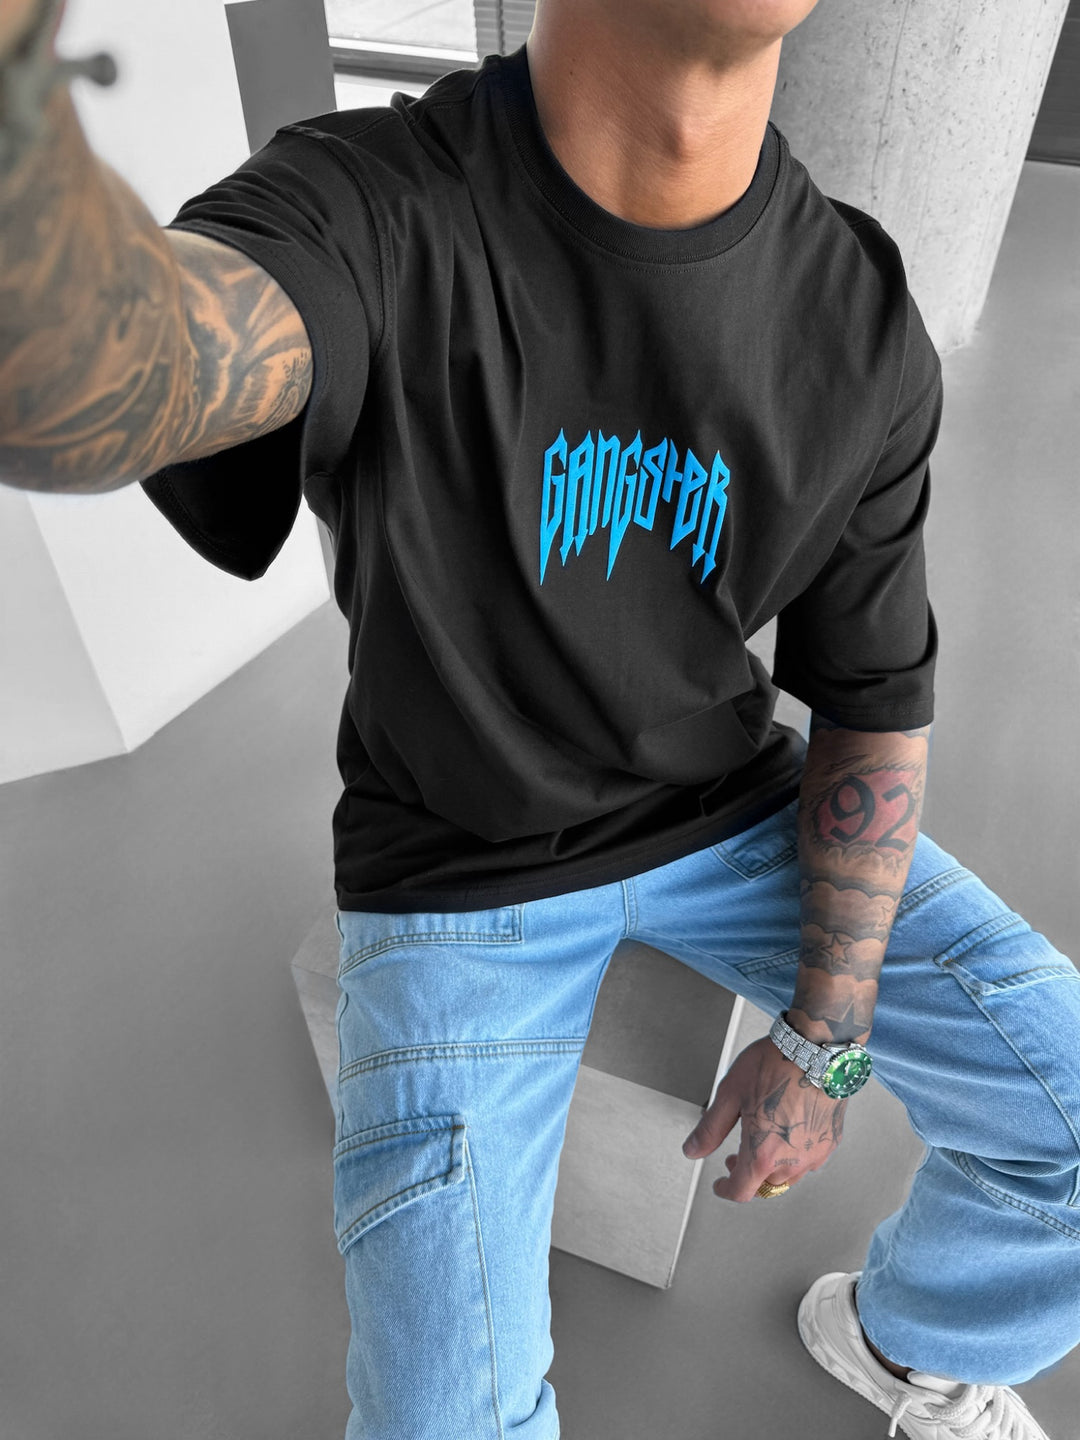 Oversize Gangster T-shirt - Black and Blue